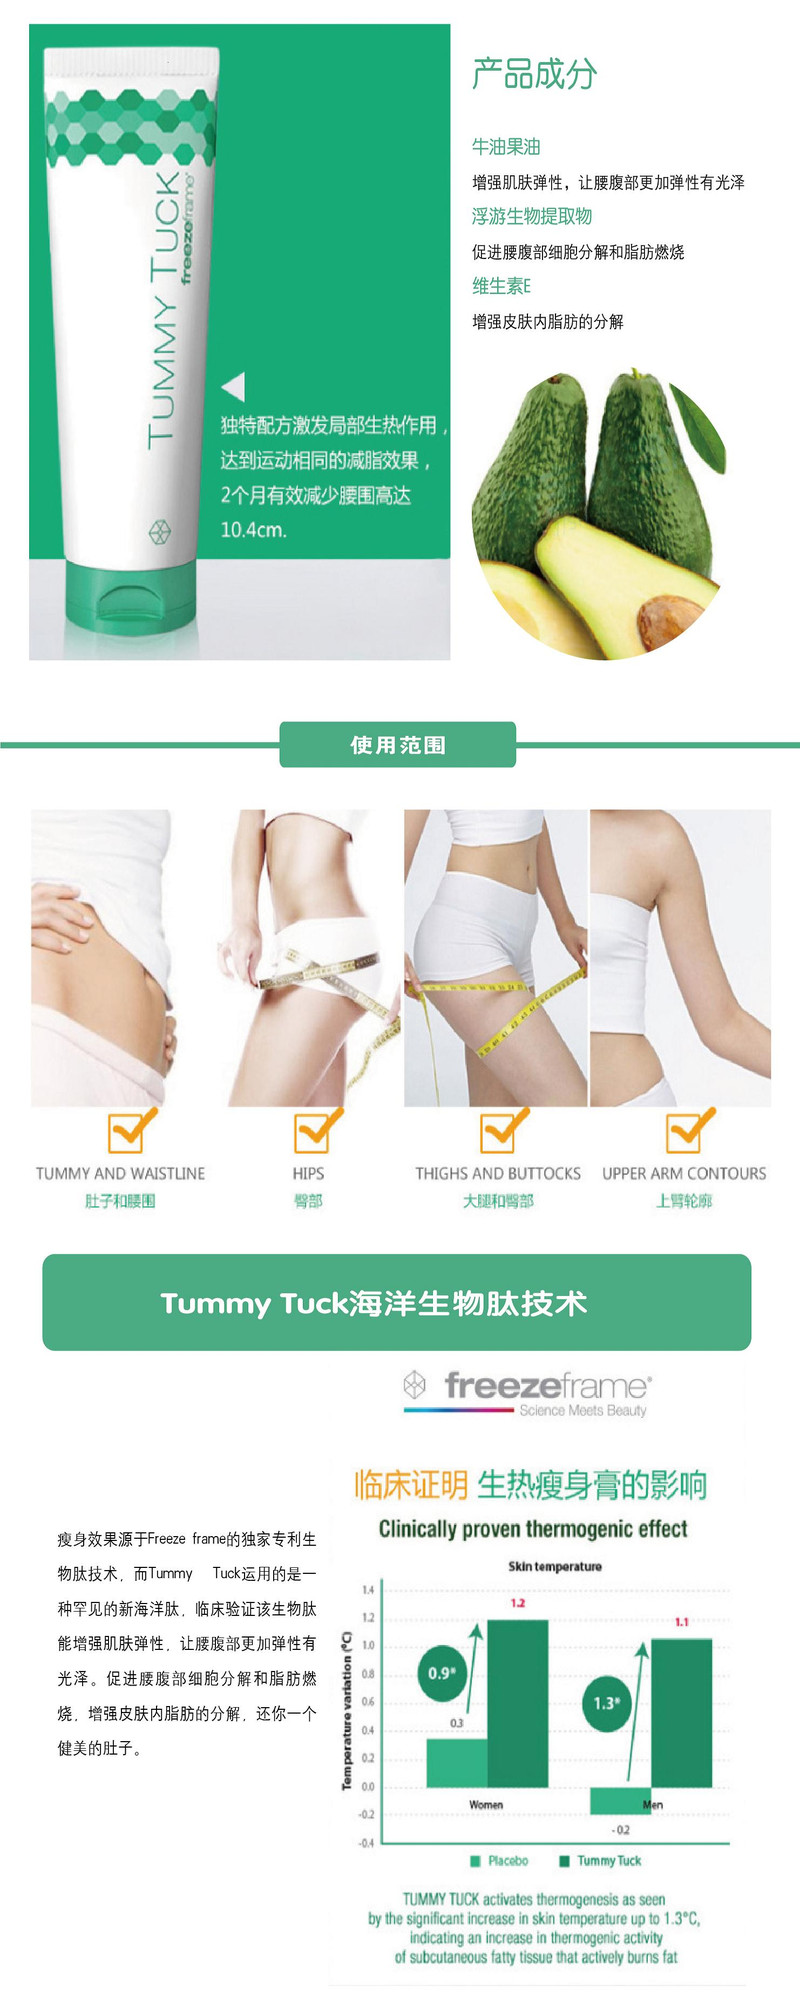 Freezeframe tummy tuck 收腹霜 100ml X 3